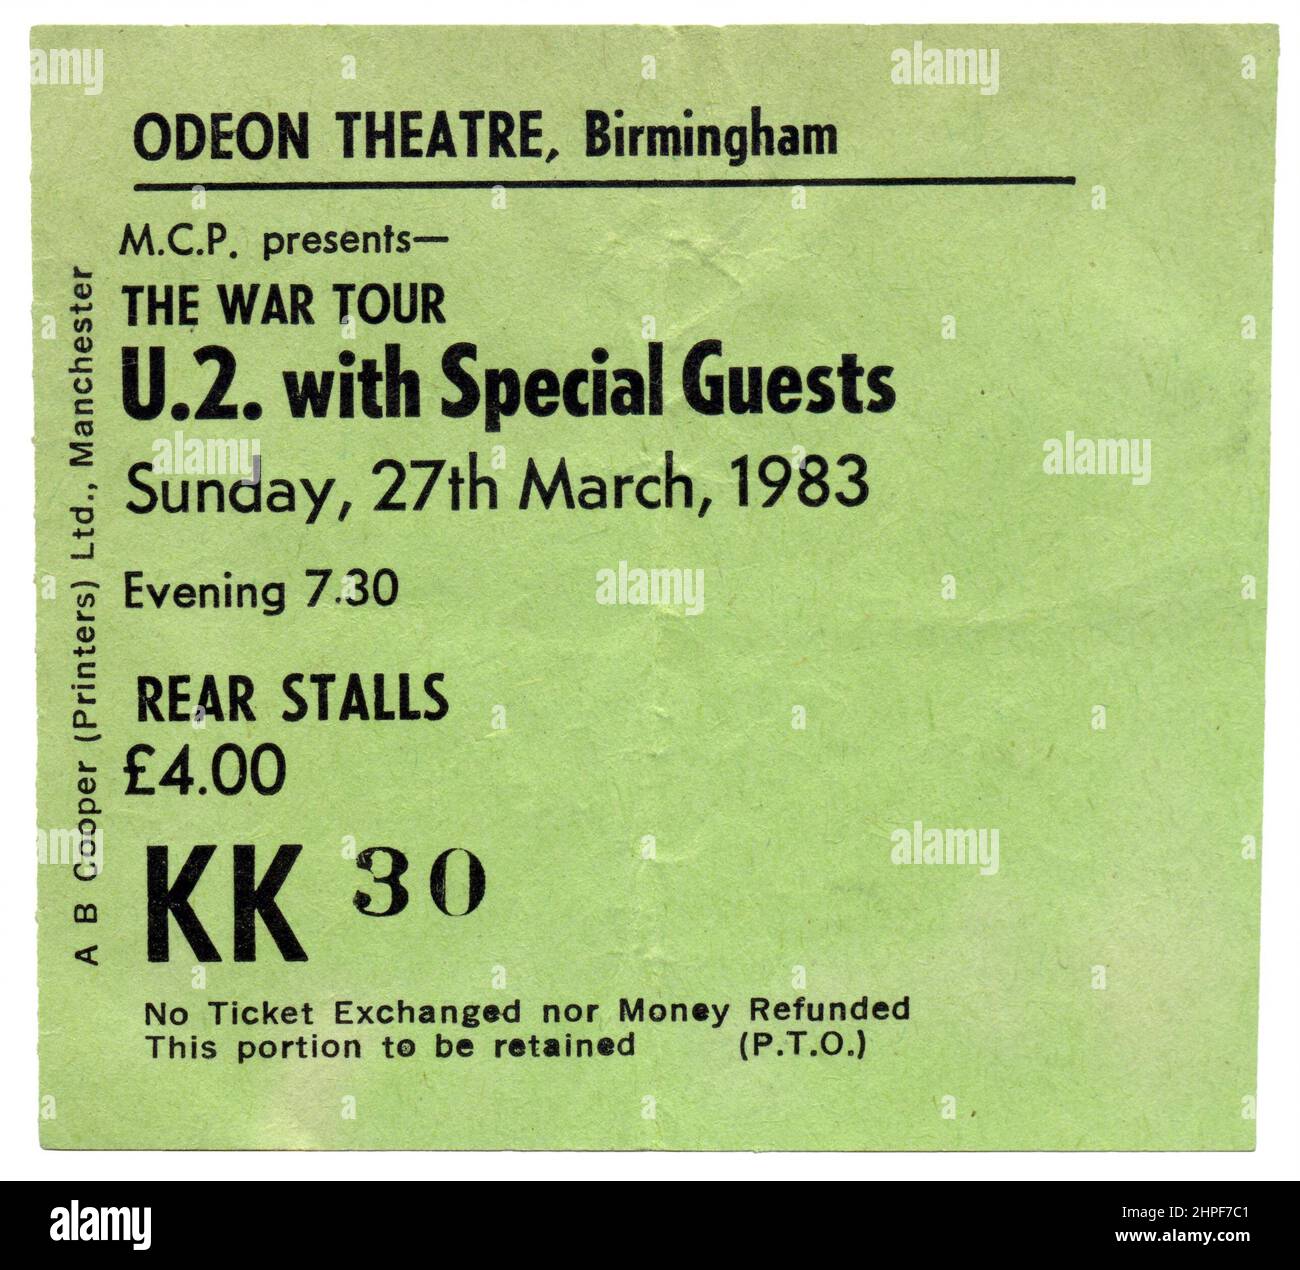 U2 concert ticket for The War Tour, Birmingham Odeon, UK, 1983 Stock Photo